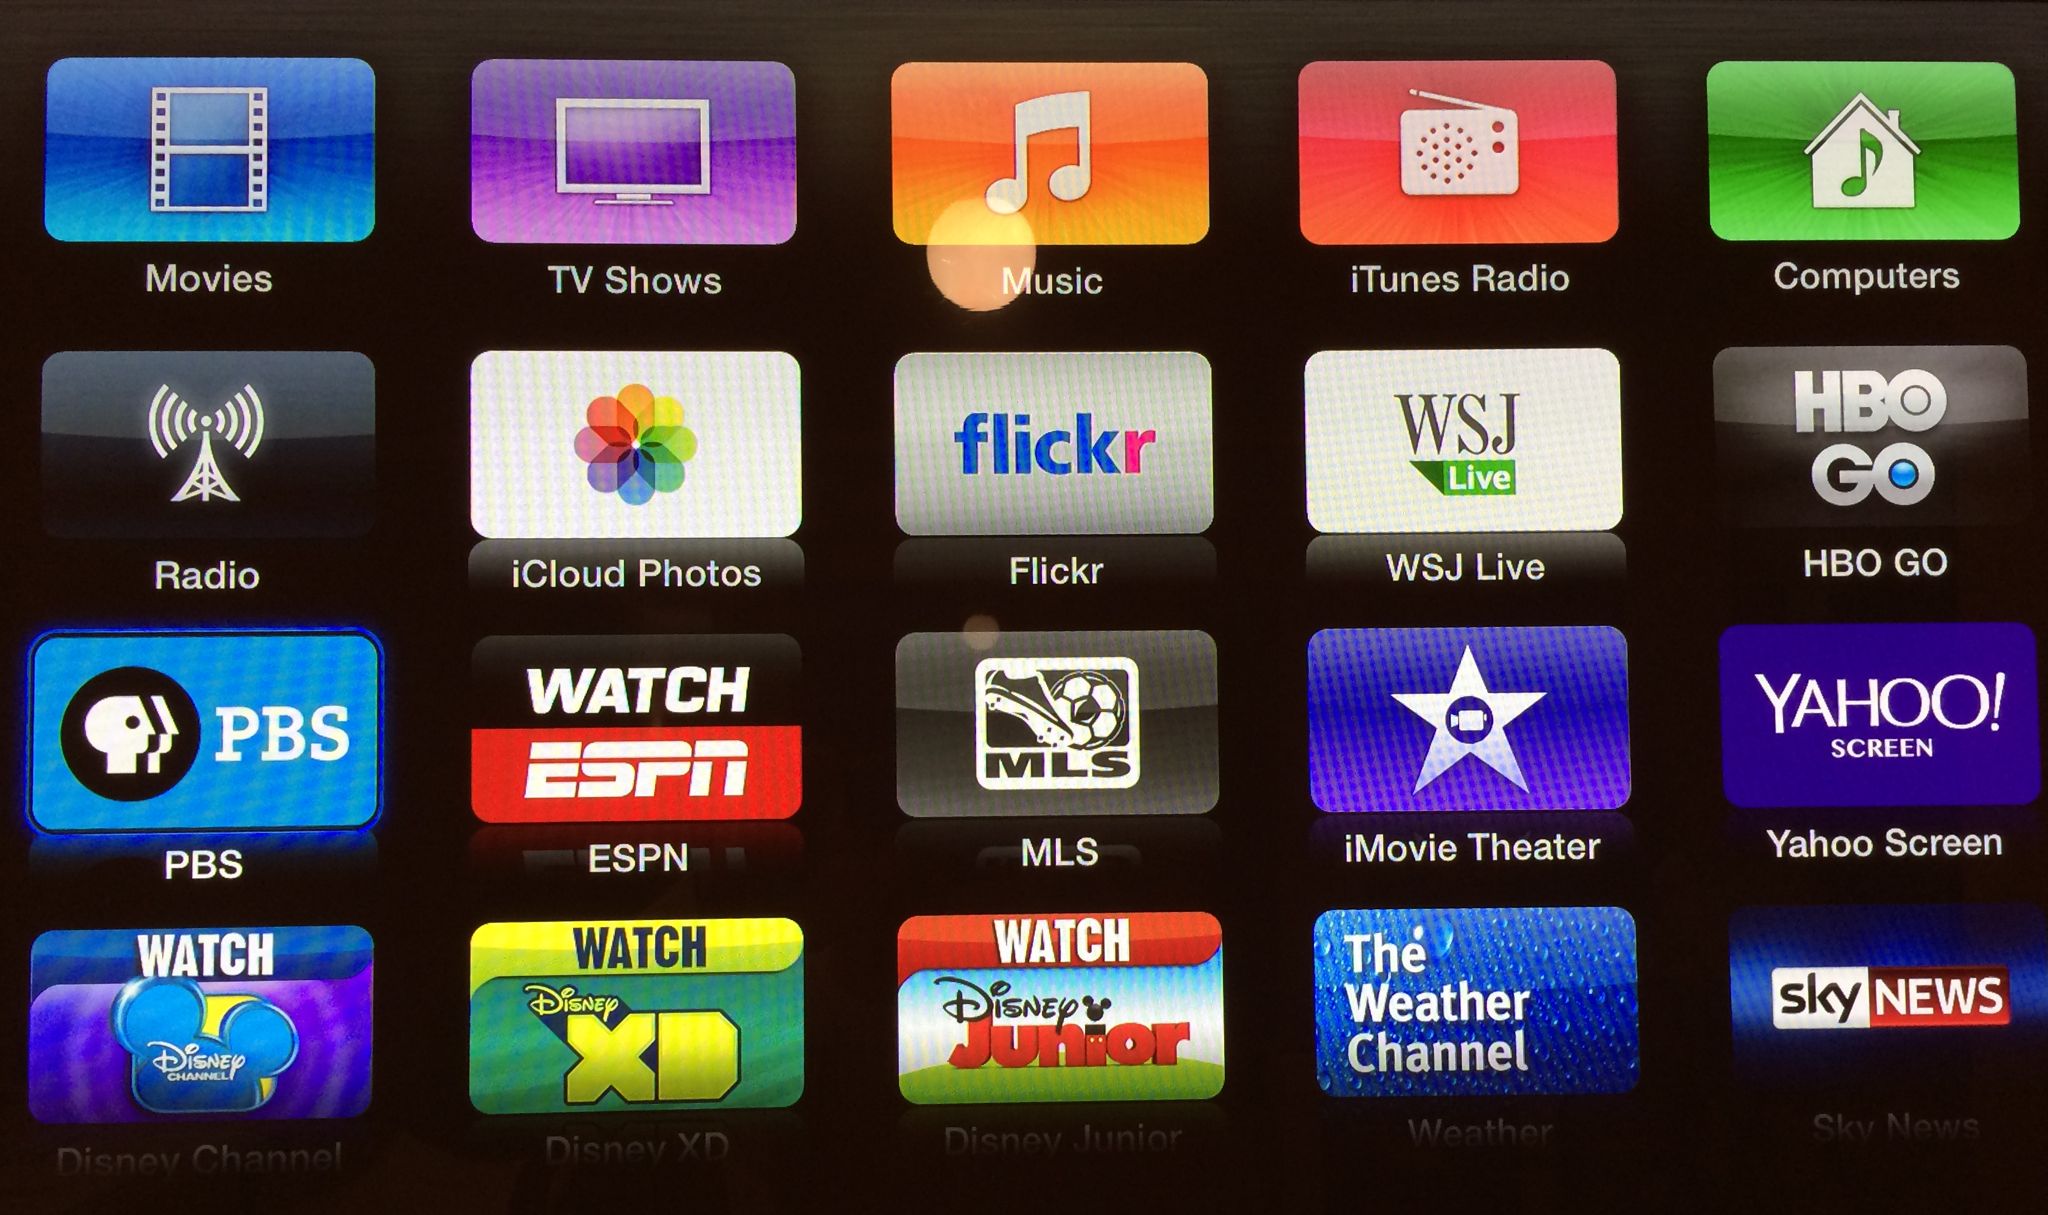 Apple TV (PBS and Yahoo Screen)